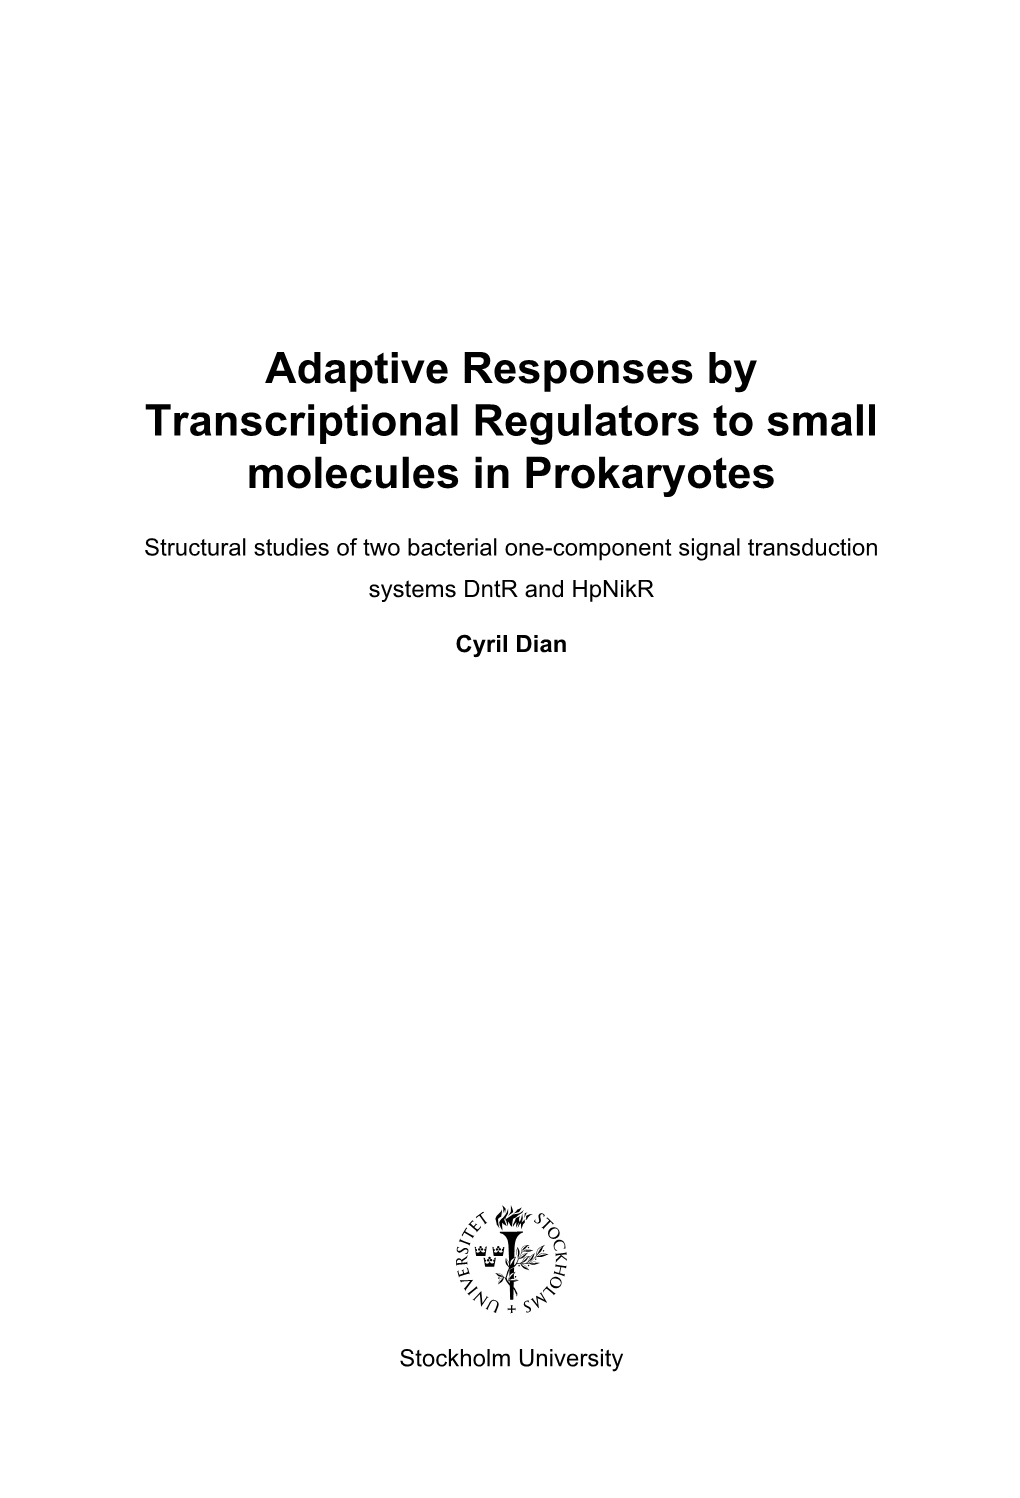 Adaptive Responses by Transcriptional Regulators to Small Molecules in Prokaryotes